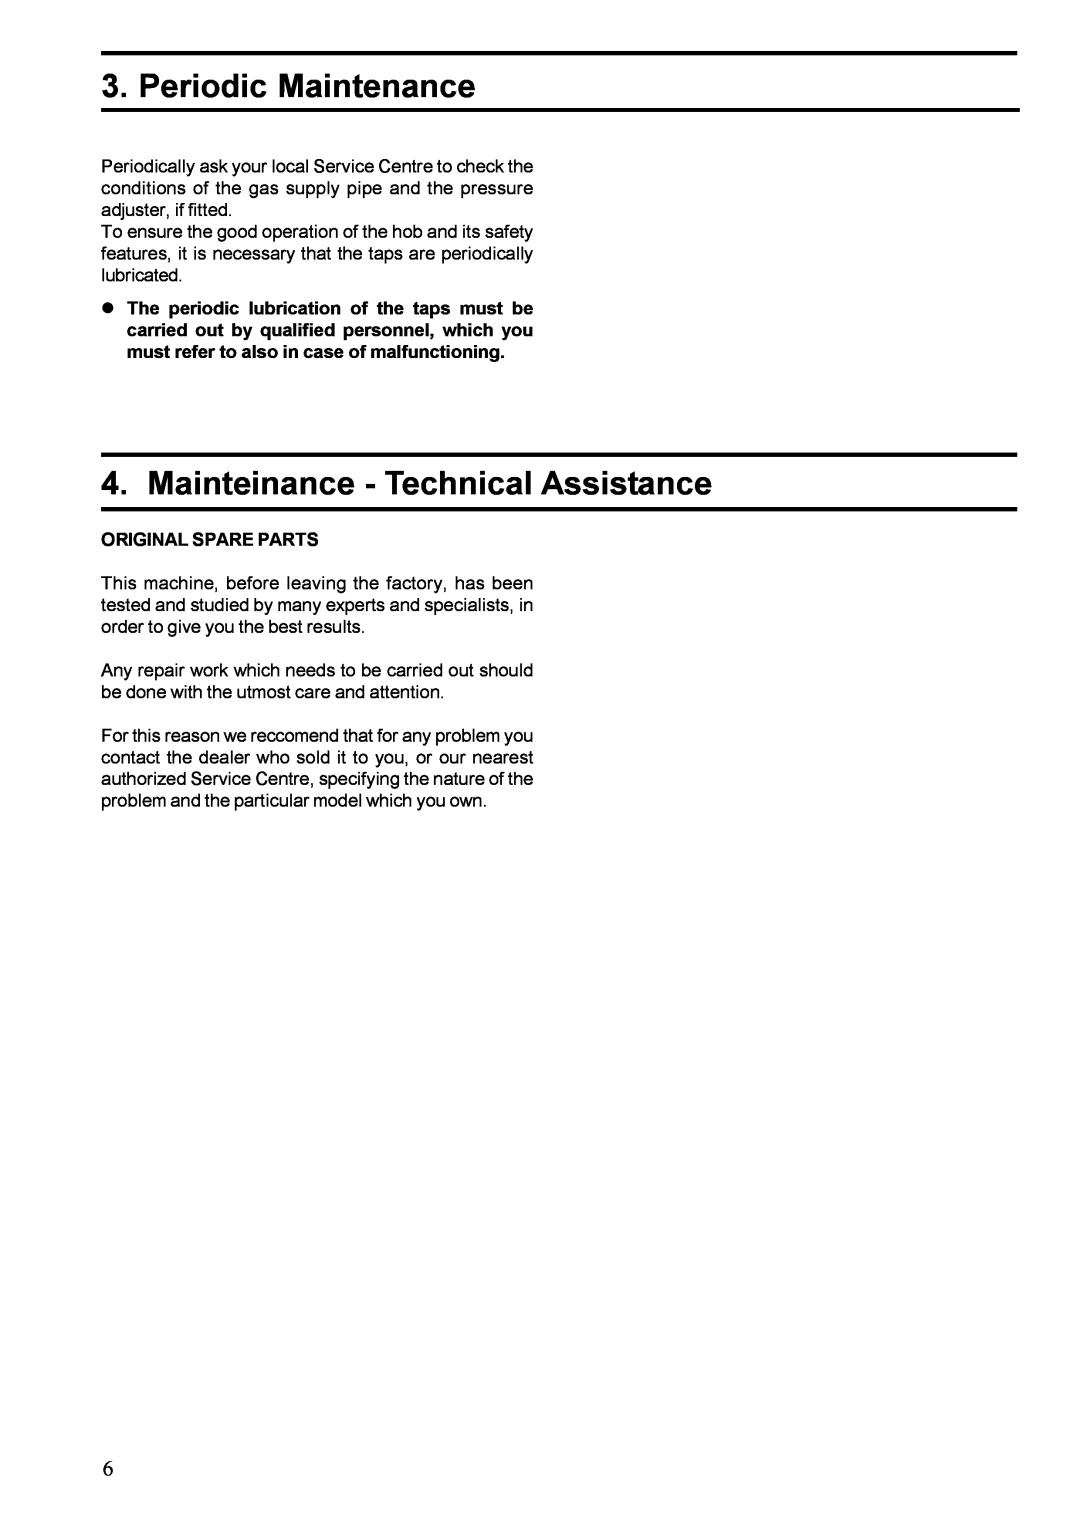 Zanussi ZGF 647 installation manual Periodic Maintenance, Mainteinance - Technical Assistance 